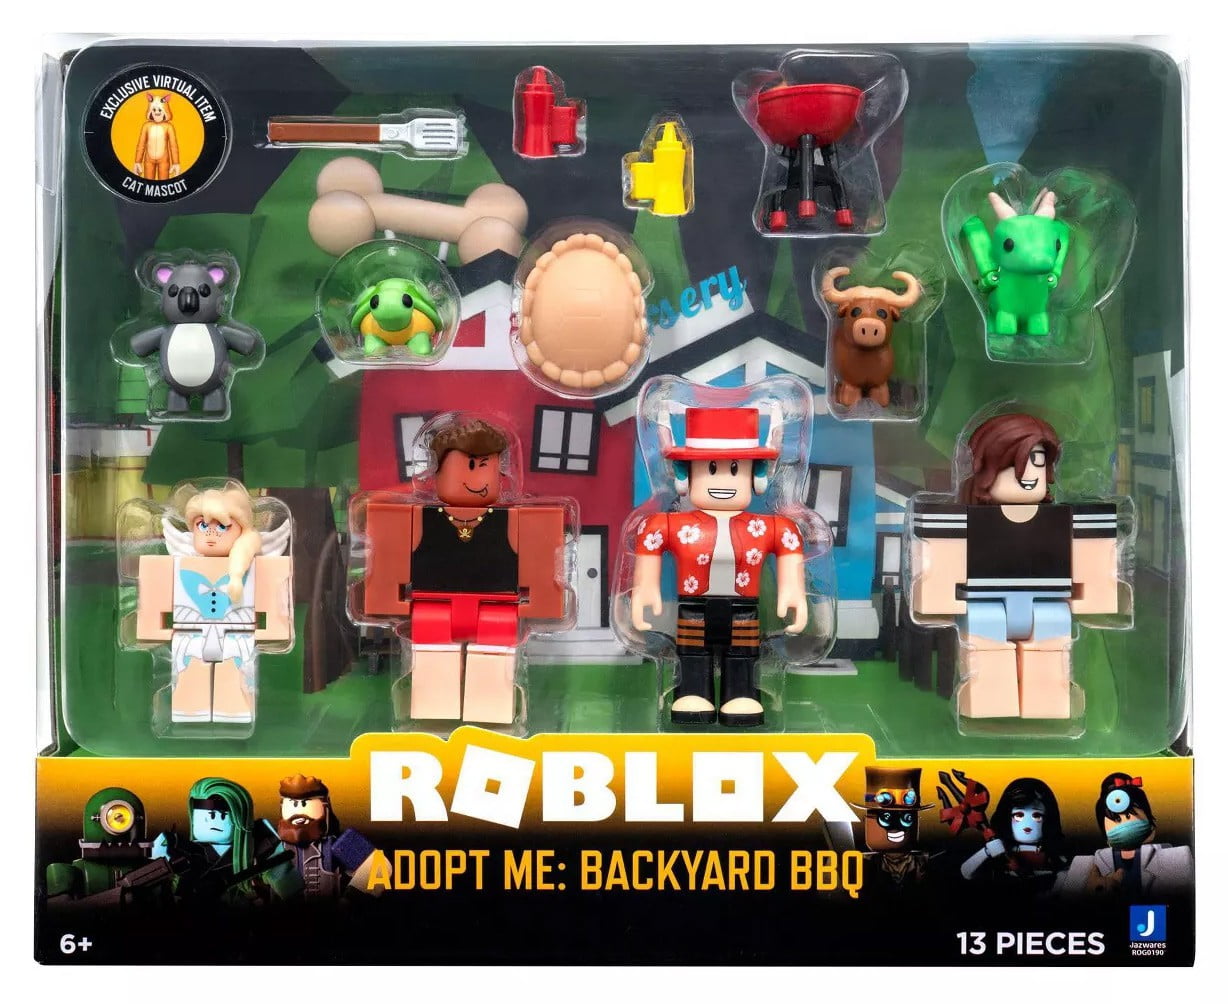 Roblox Adopt Me Backyard Bbq Action Figure 4 Pack Walmart Com Walmart Com - roblox images adopt me